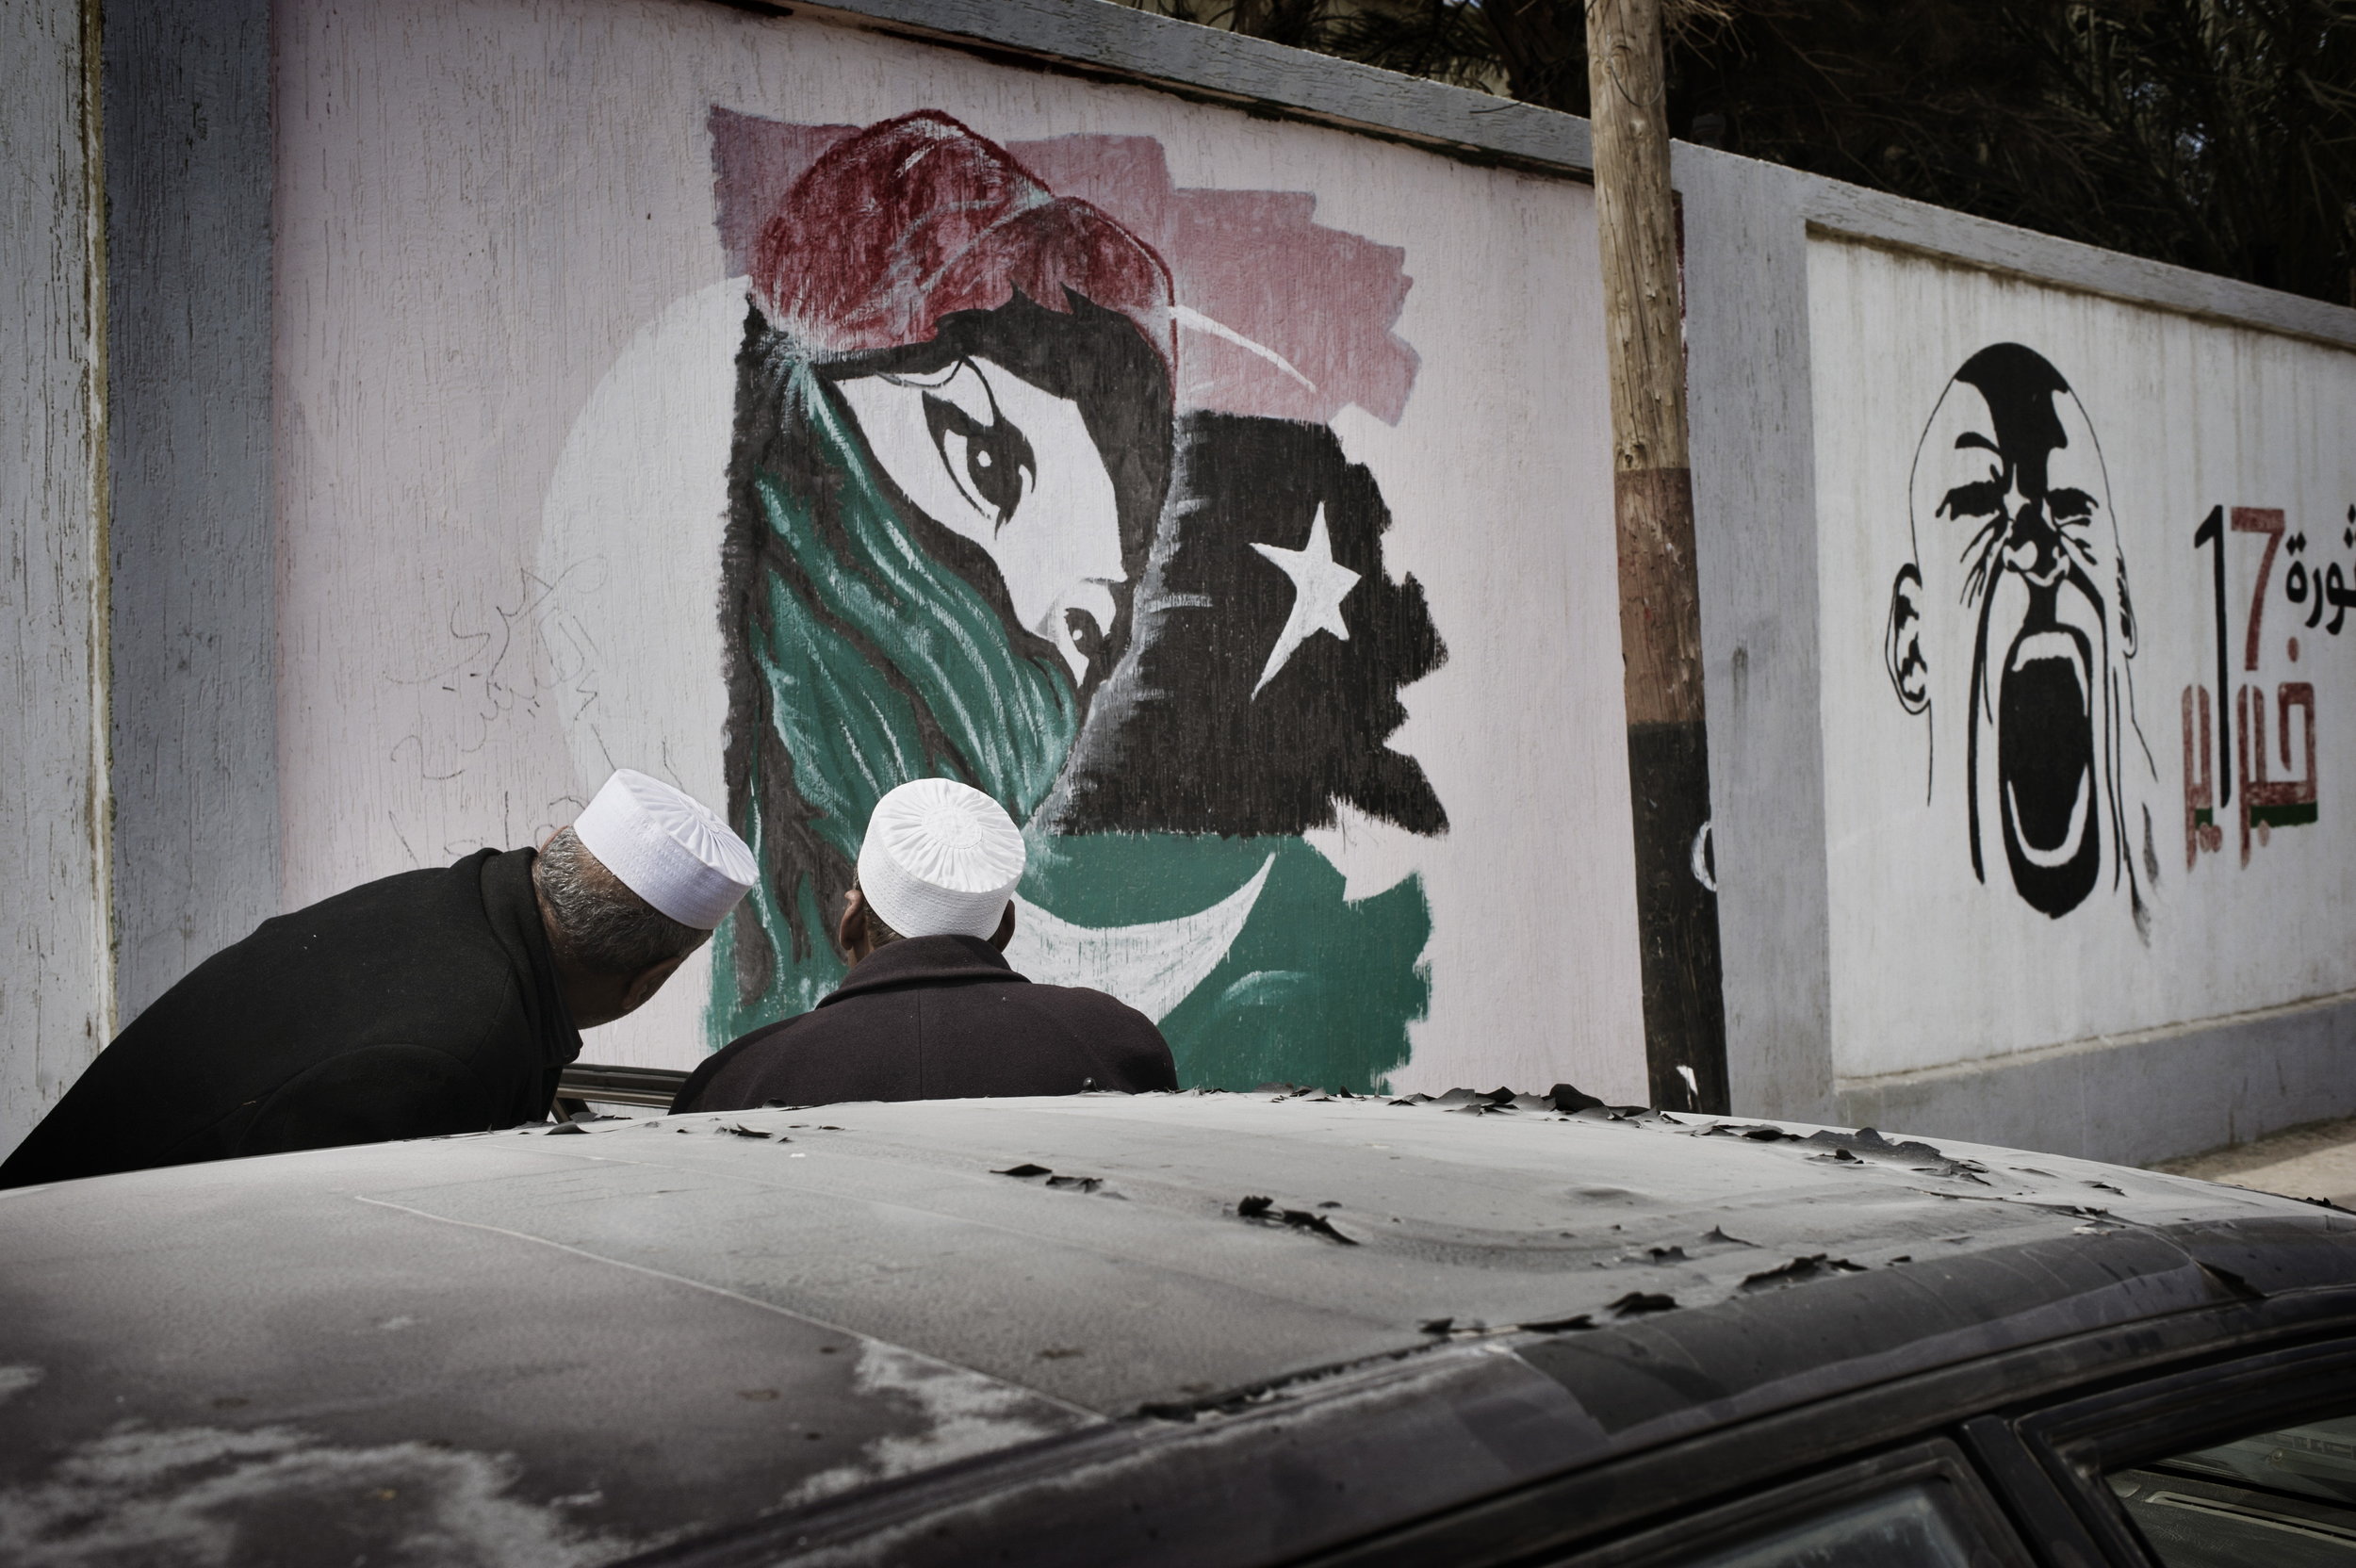  Benghazi Libya  March 28  2012:  New  graffiti  on  the school's wall.
 